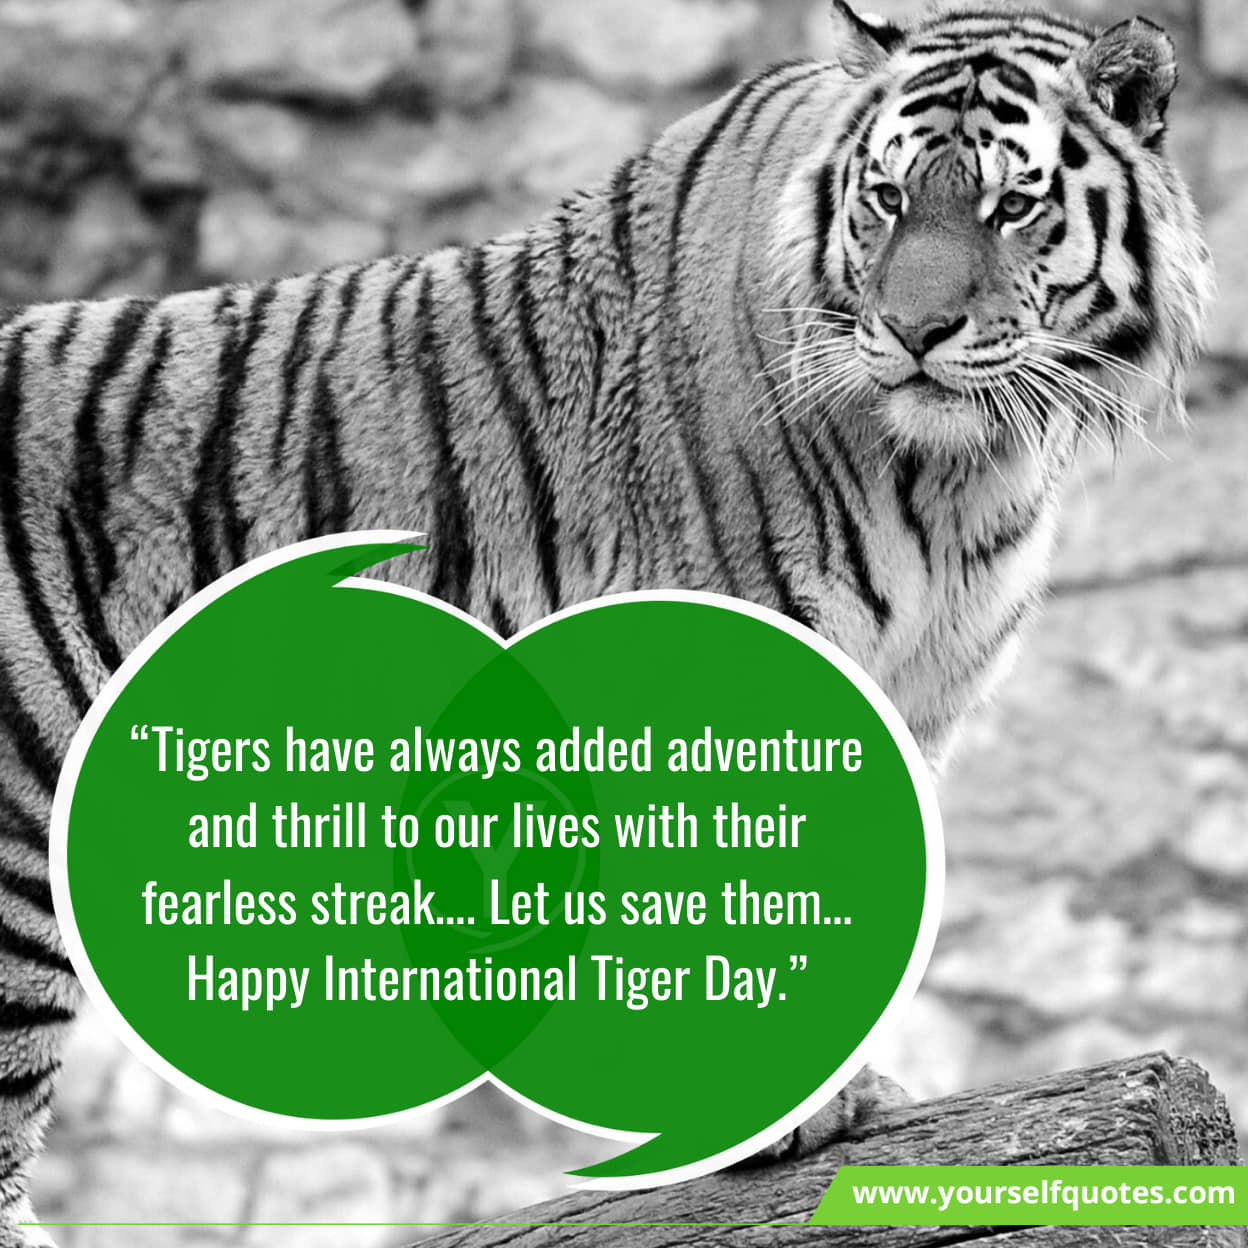 Tiger Day Best Messages & Slogans